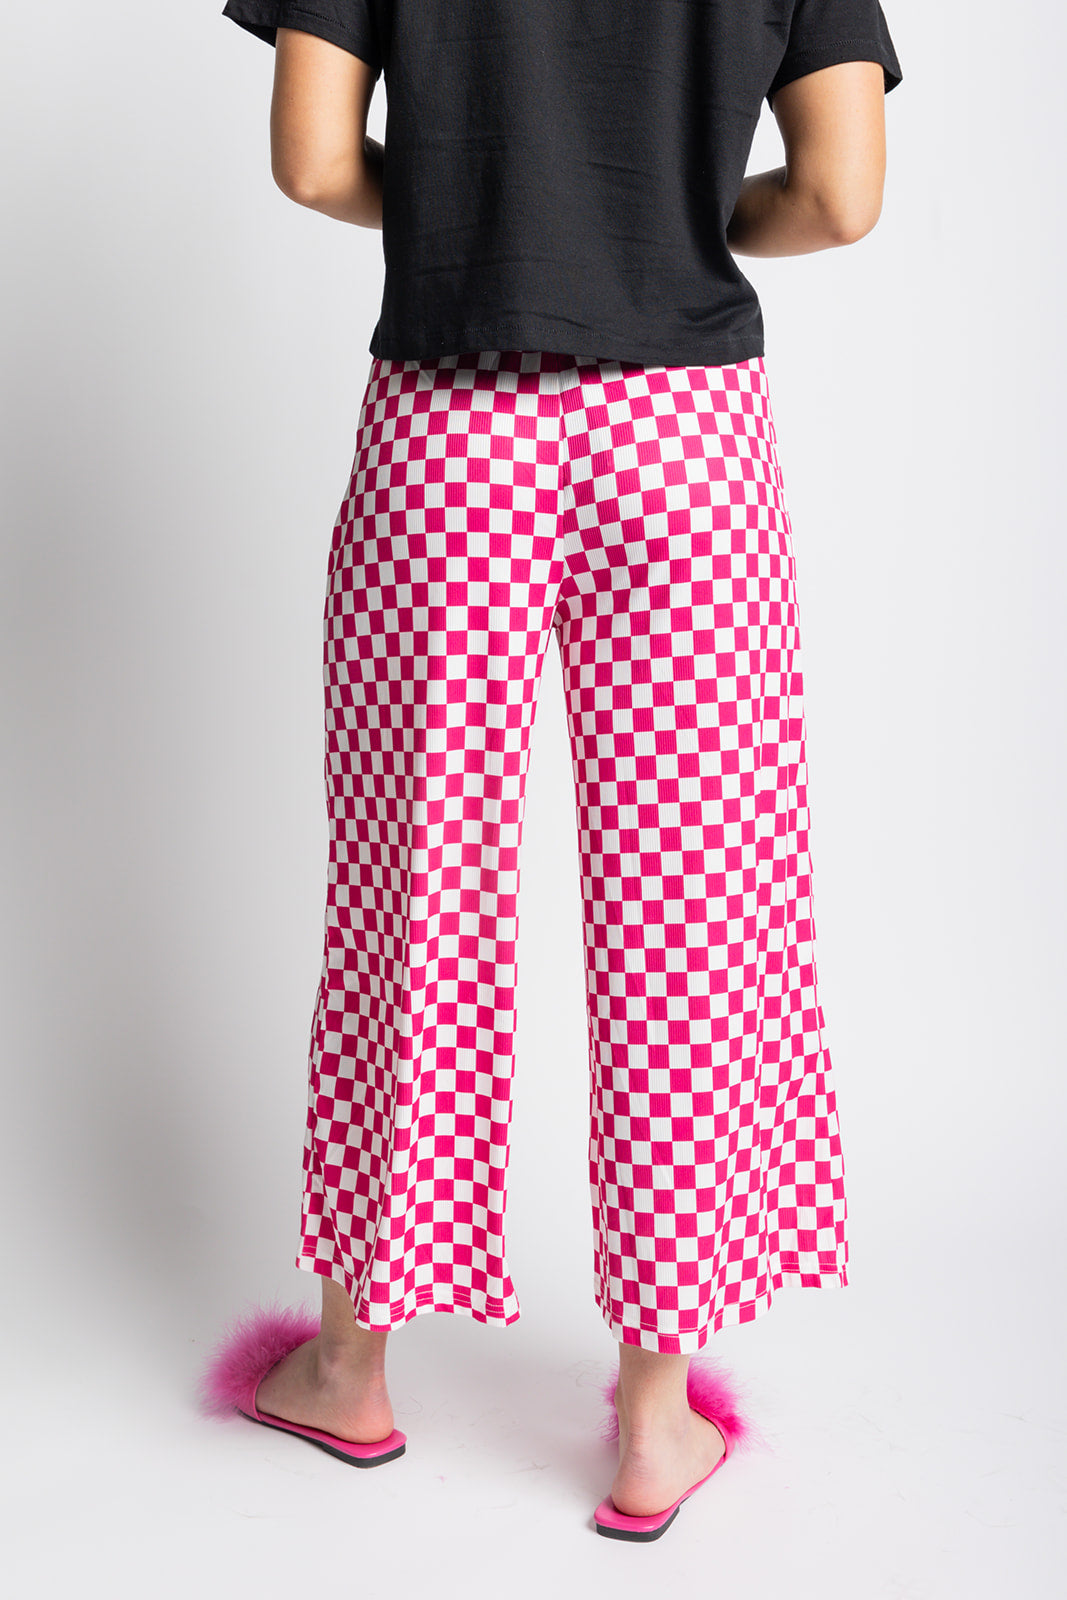 My Reputation Checkered Pants - Pink [S-3X]